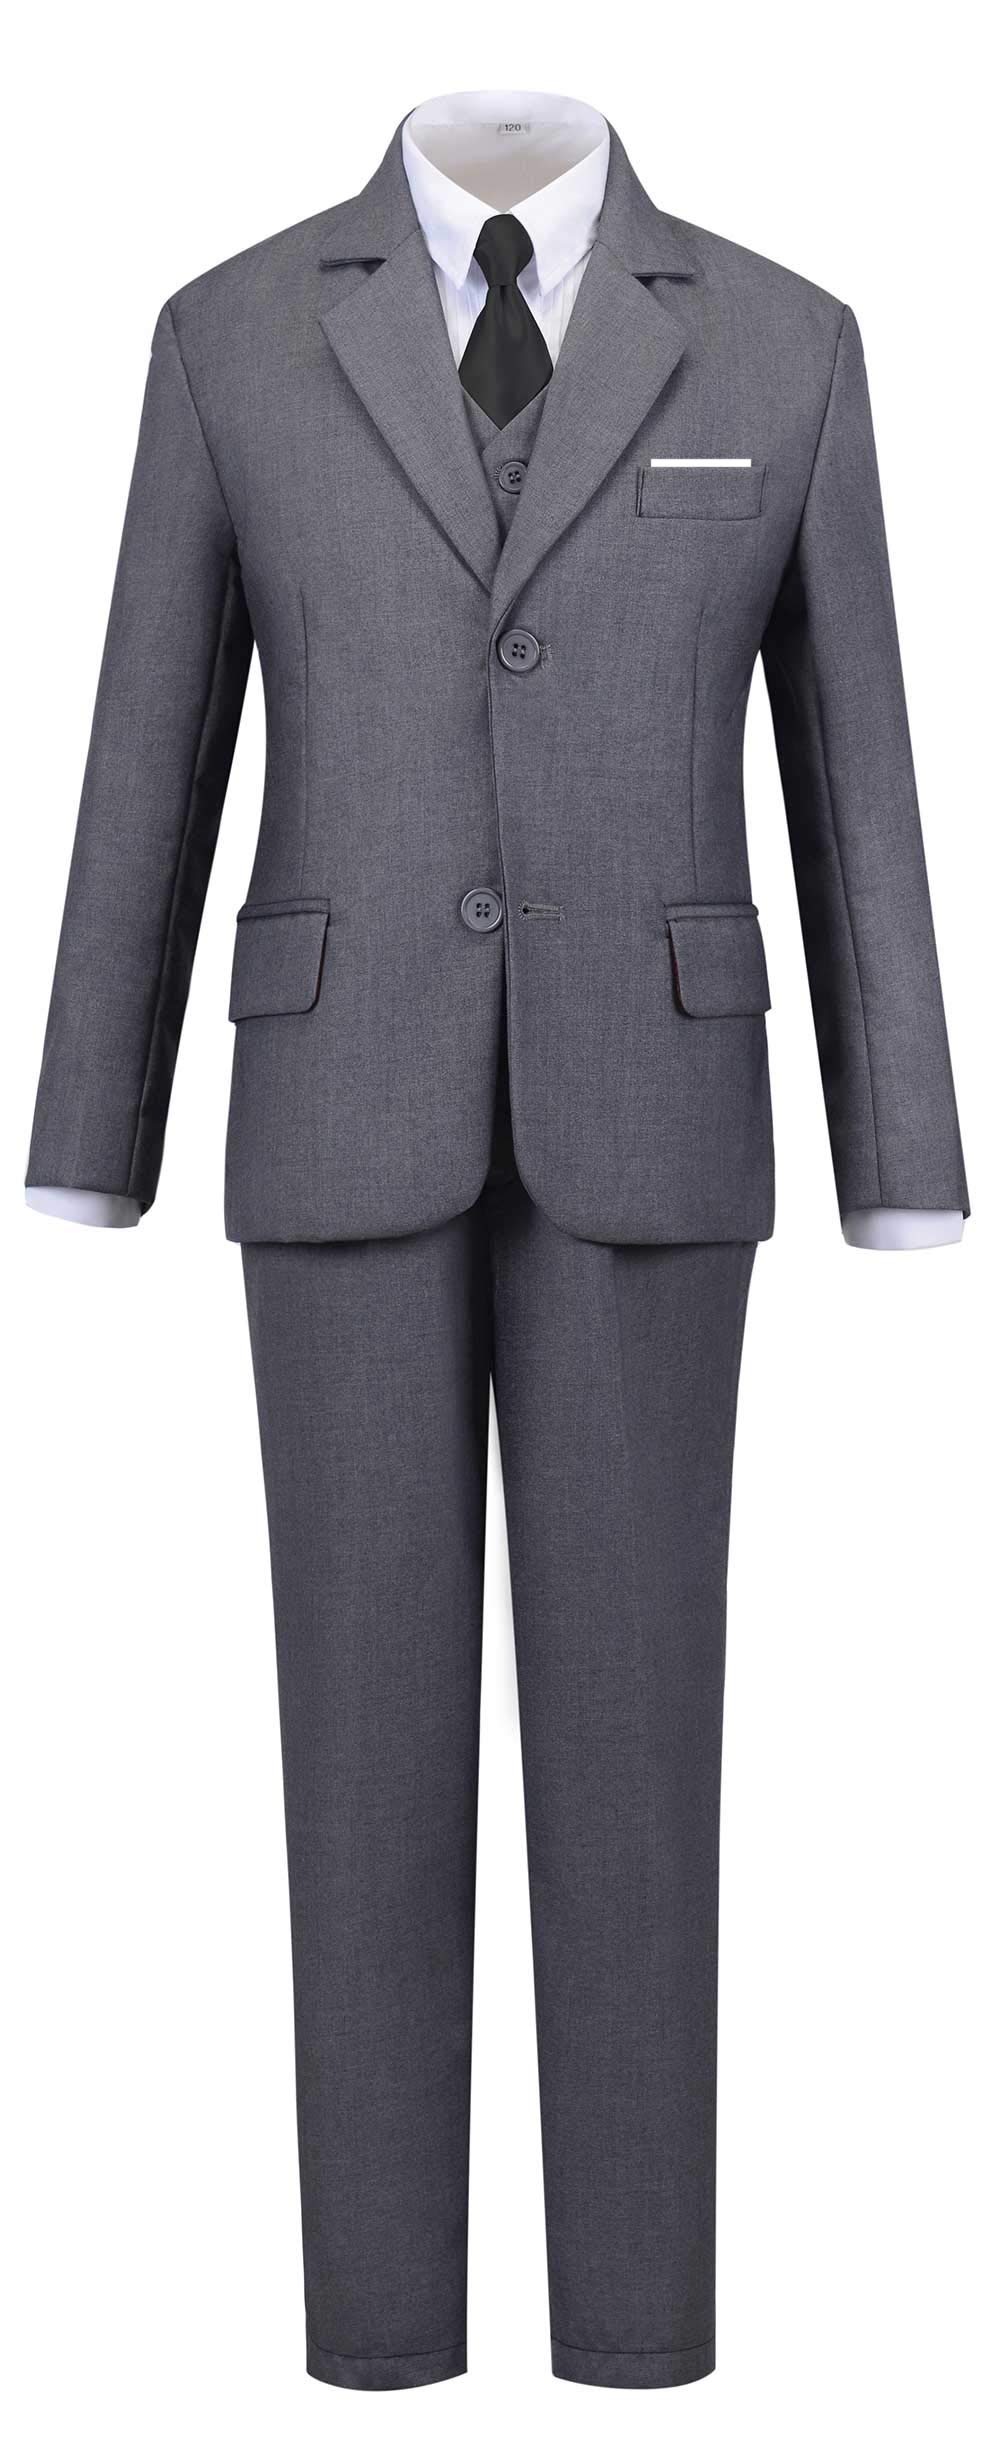 Addneo Big Boys Suits Slim Fit Formal Suit Set With Jacket Vest Pants Dress White Shirt And Black Tie Size 8